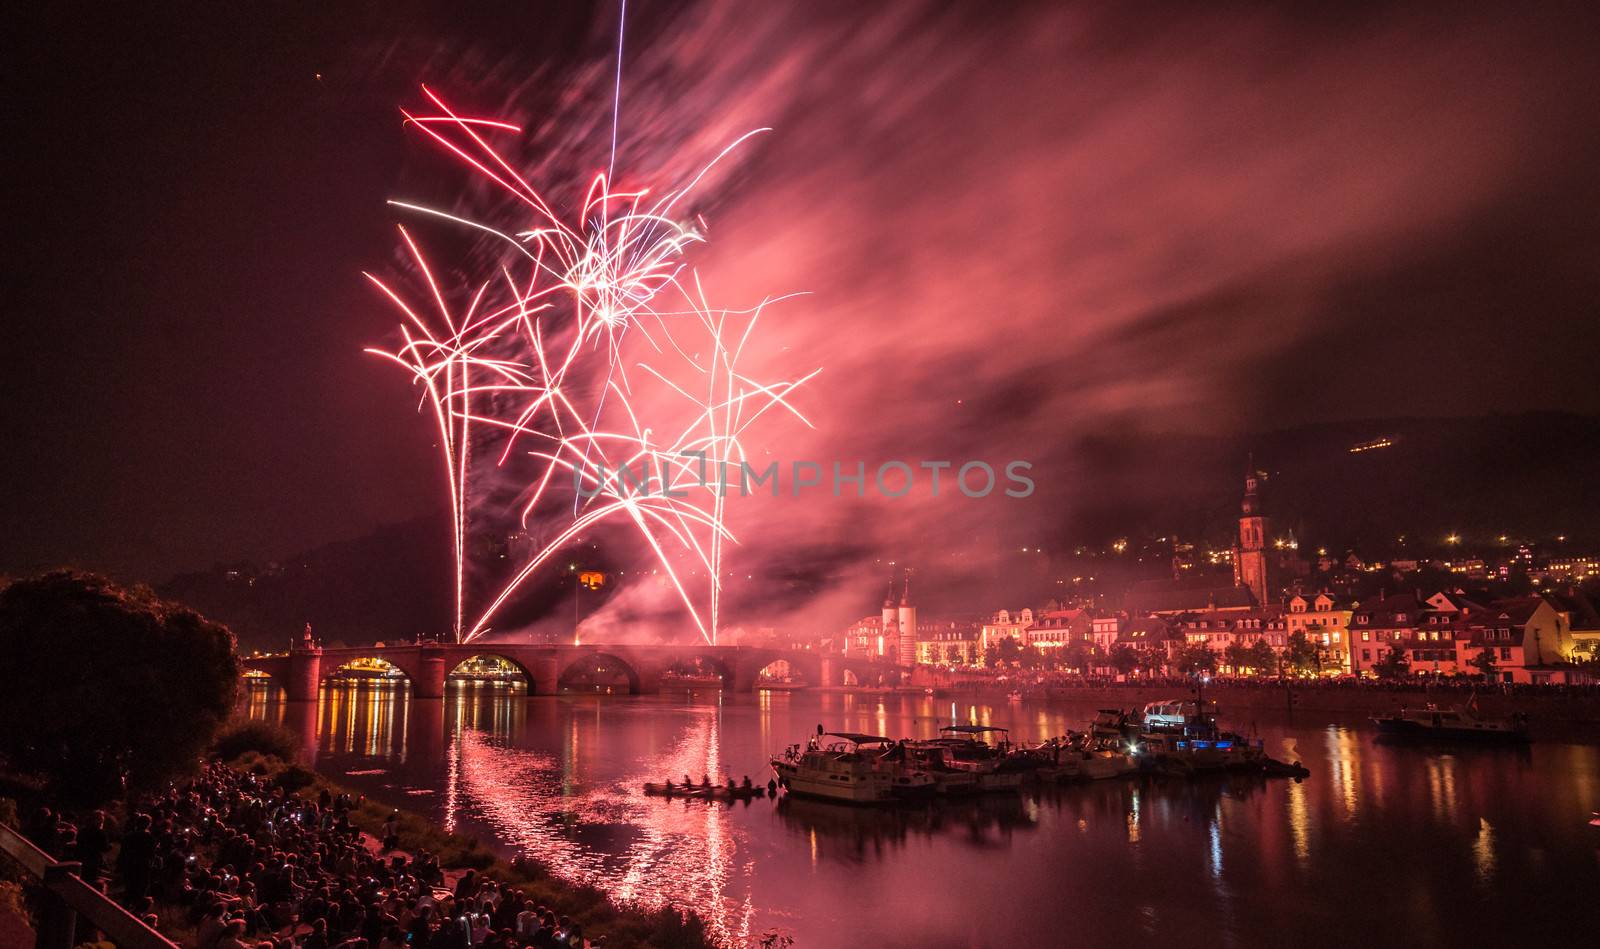 fireworks at the event Heidelberg Castle Illumination